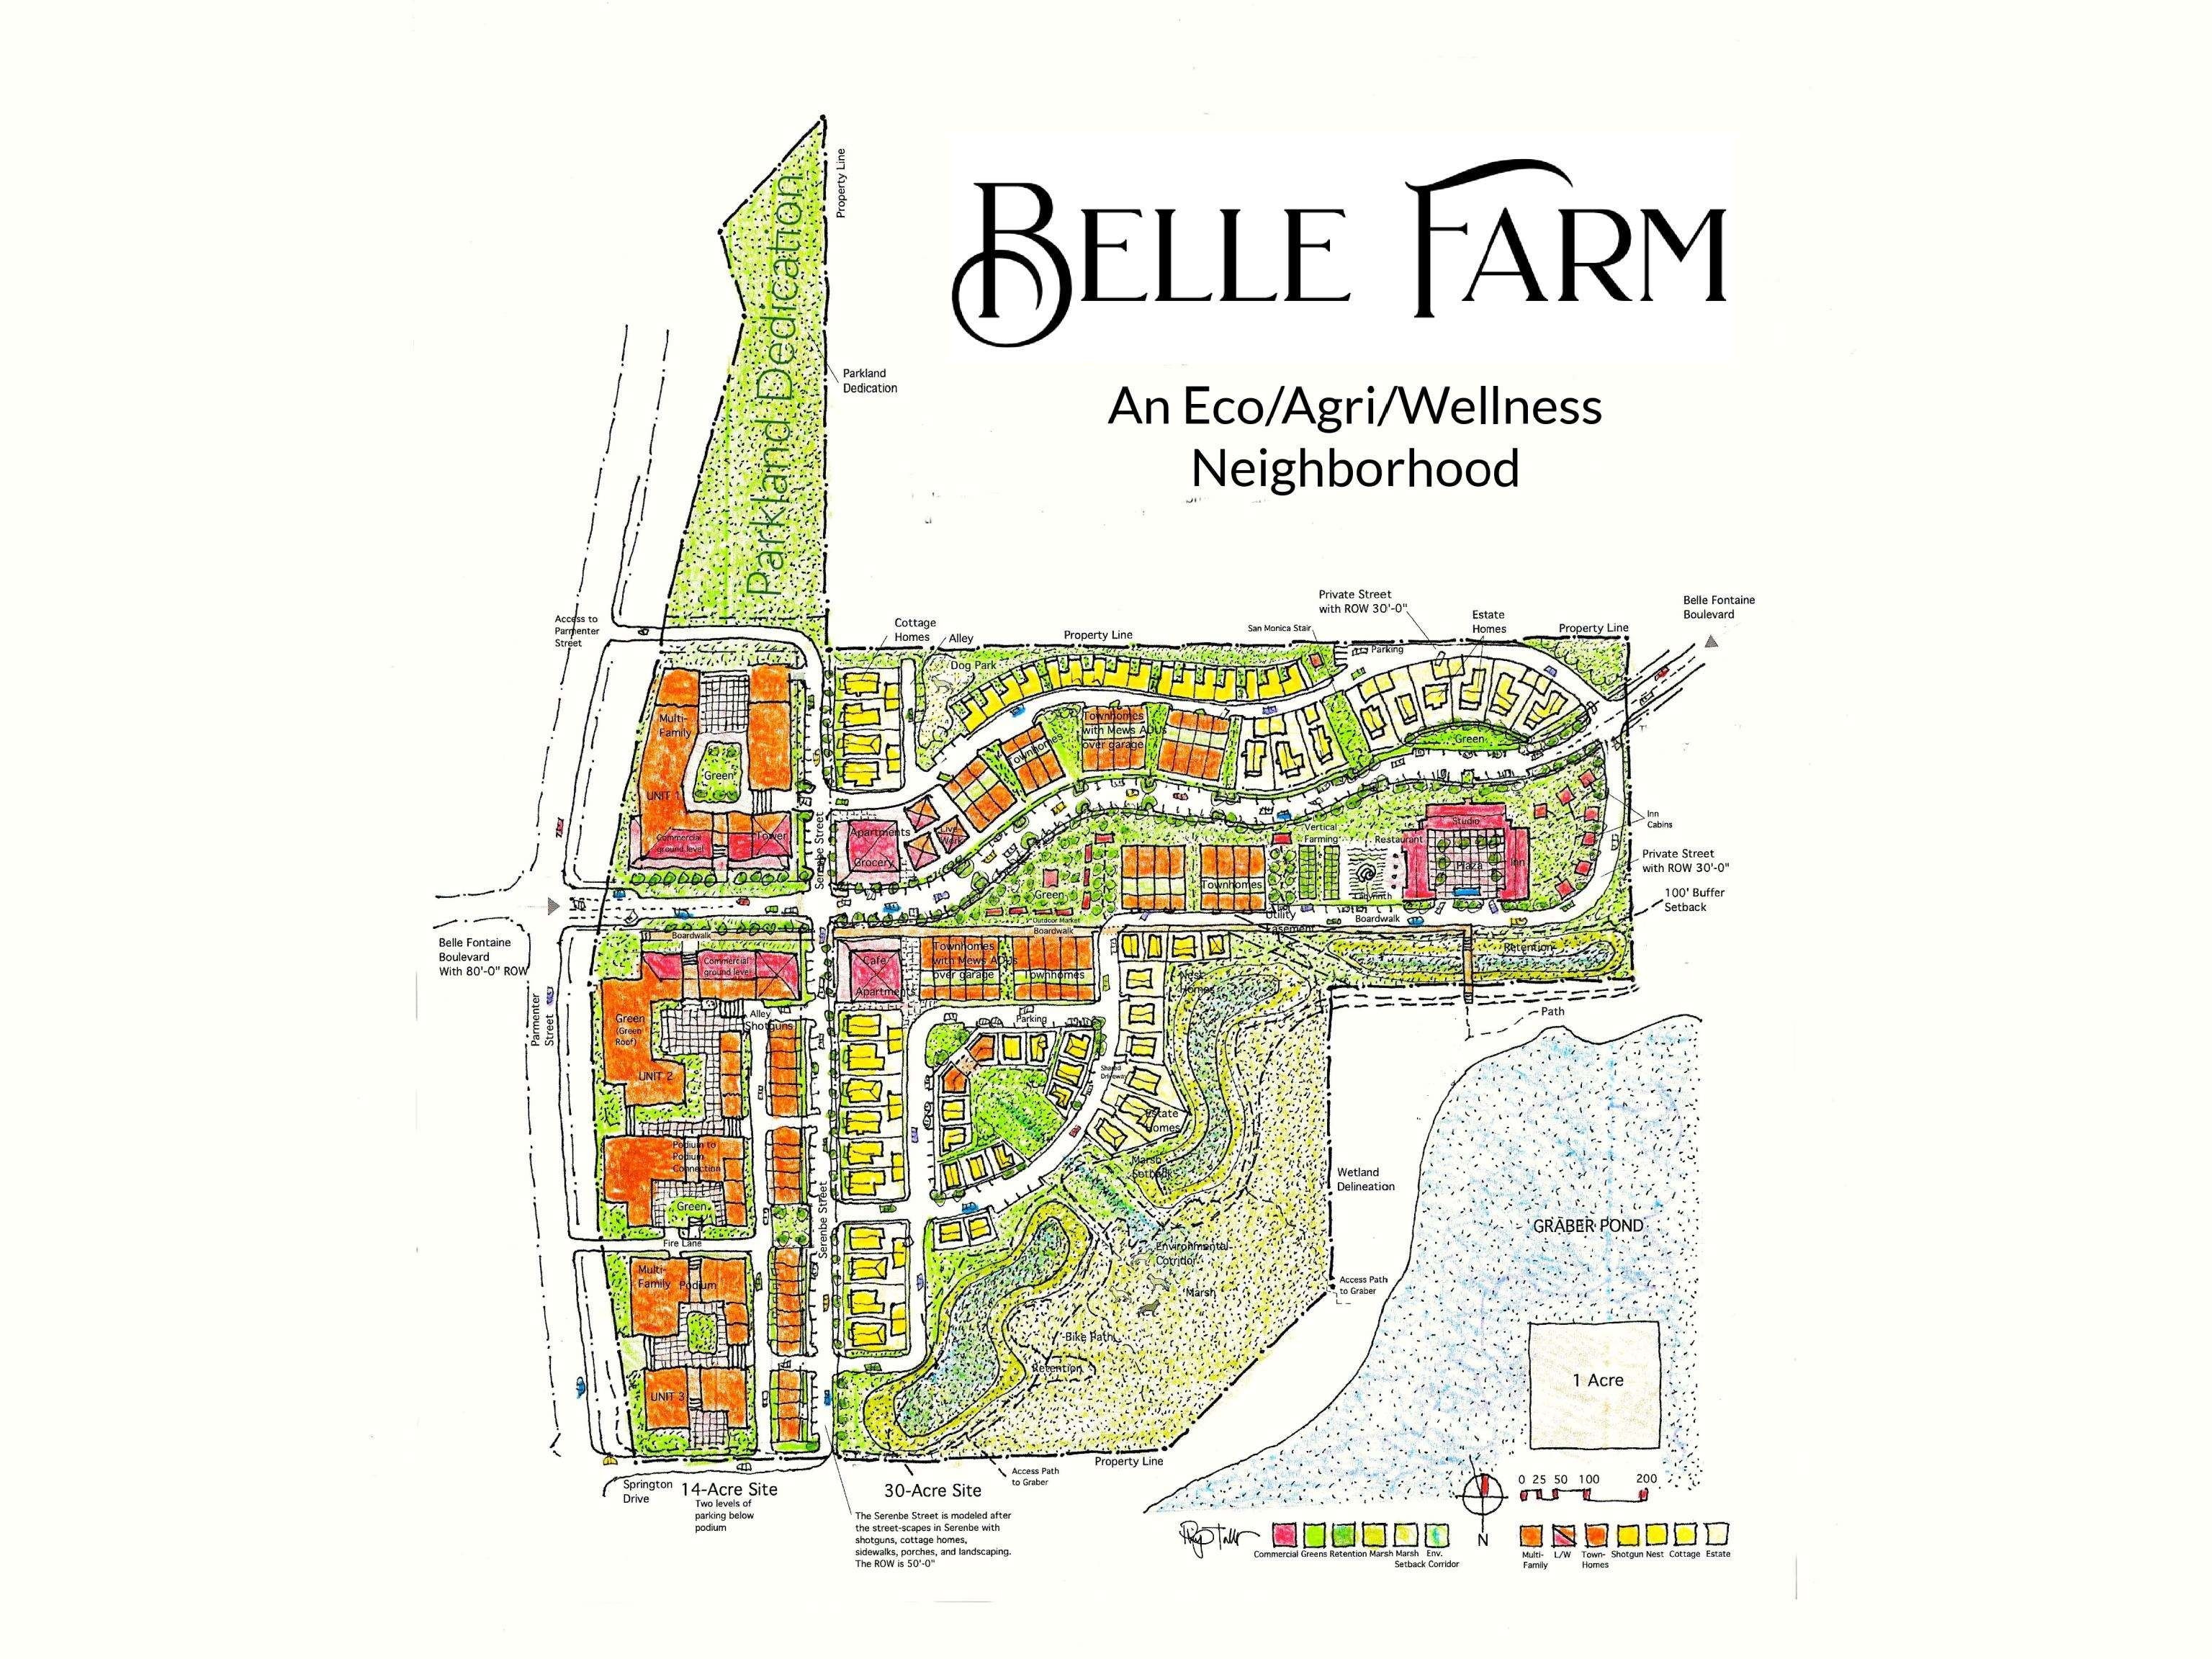 2. Lot 38 Belle Farm